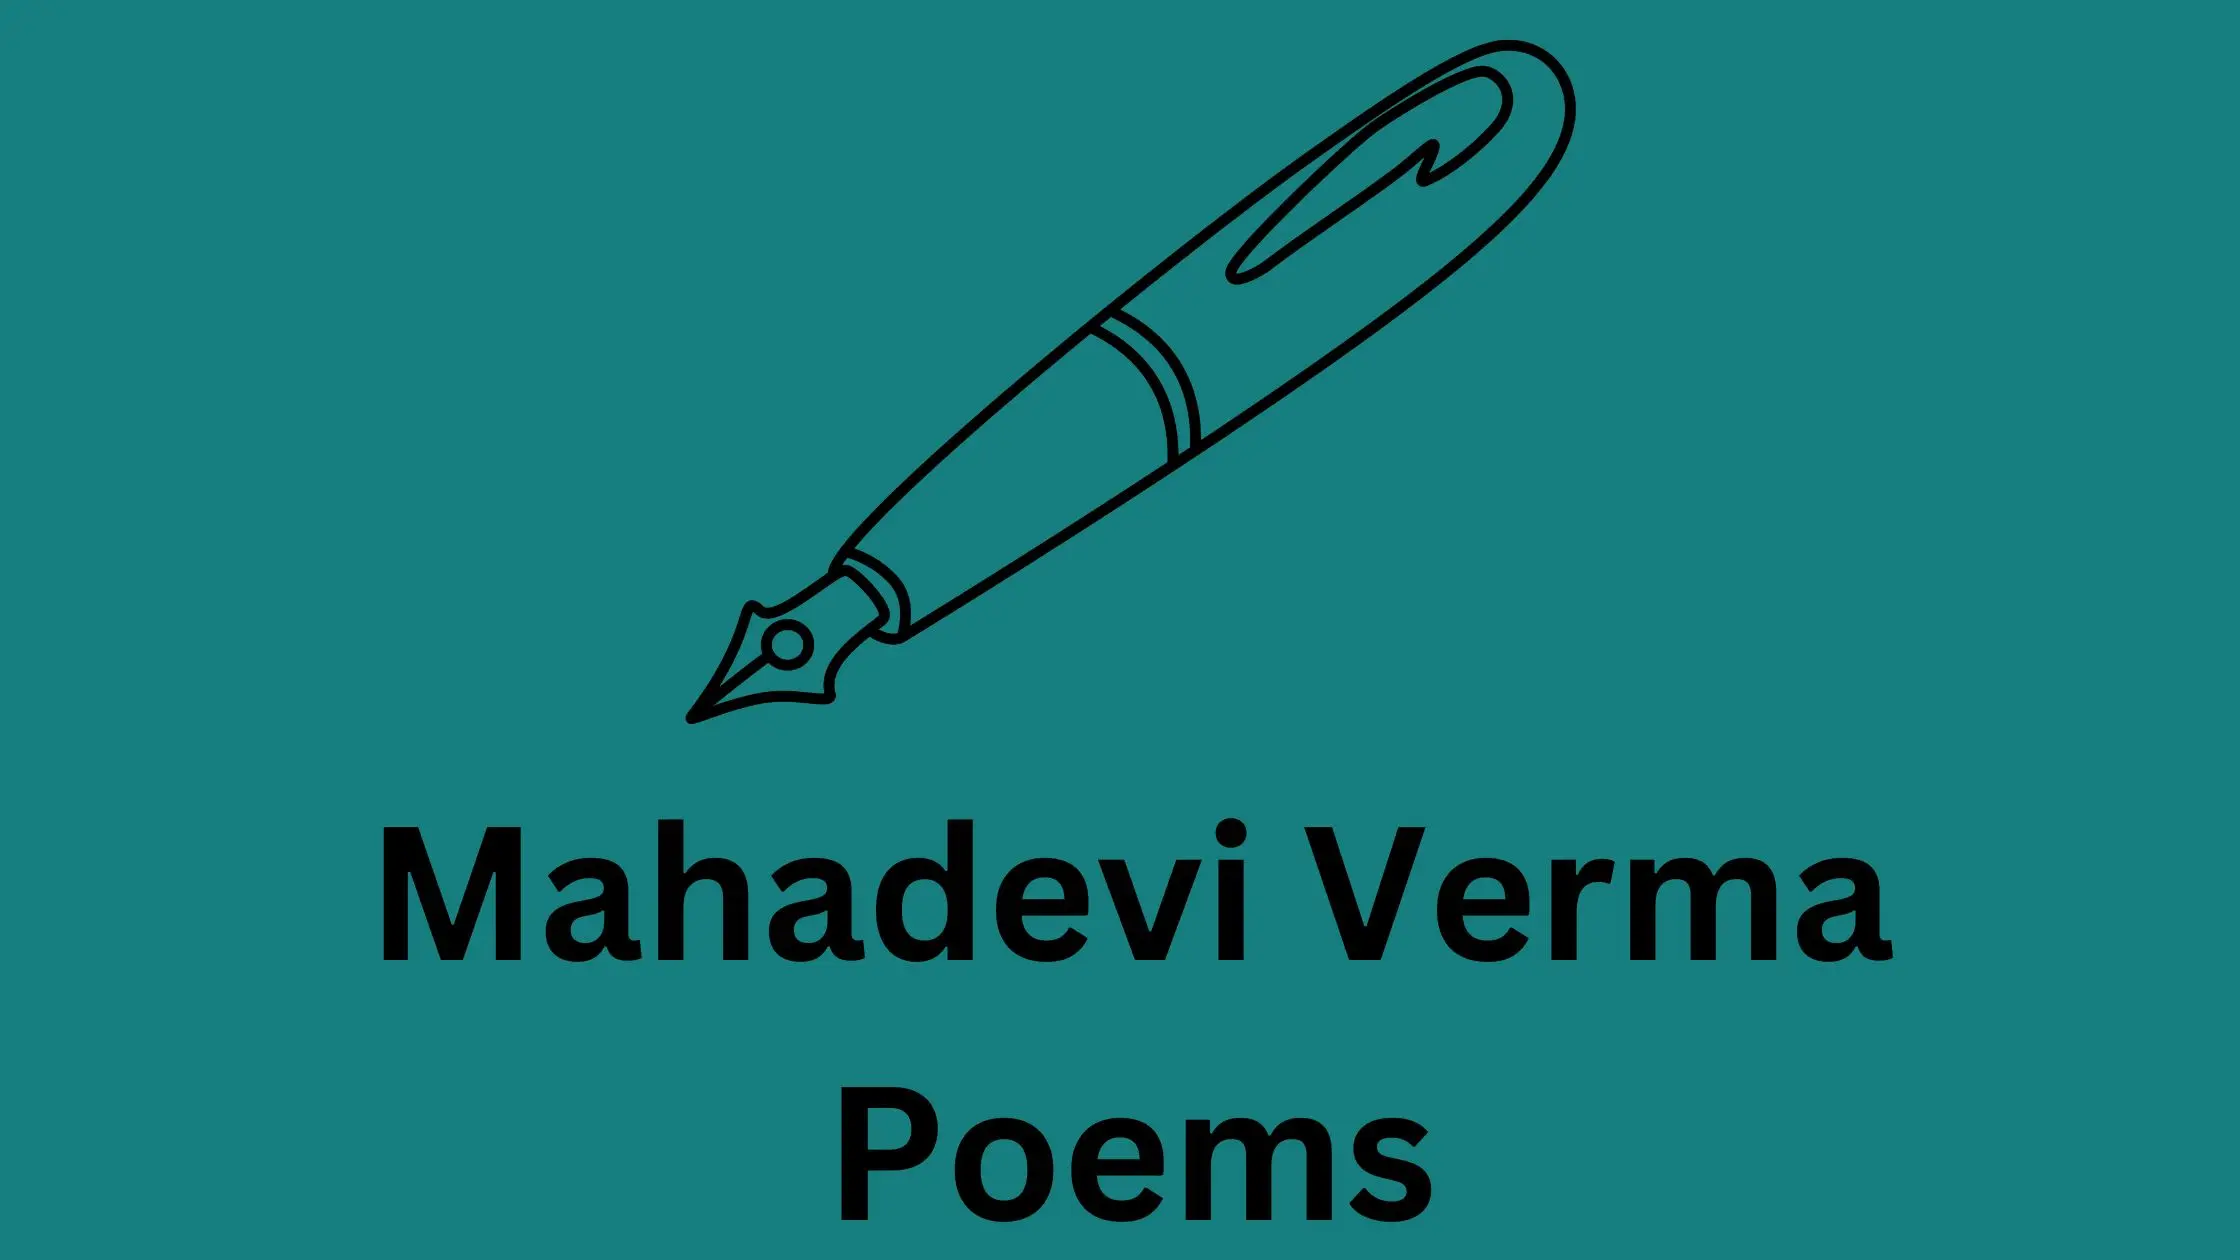 Mahadevi Verma Poems in Hindi